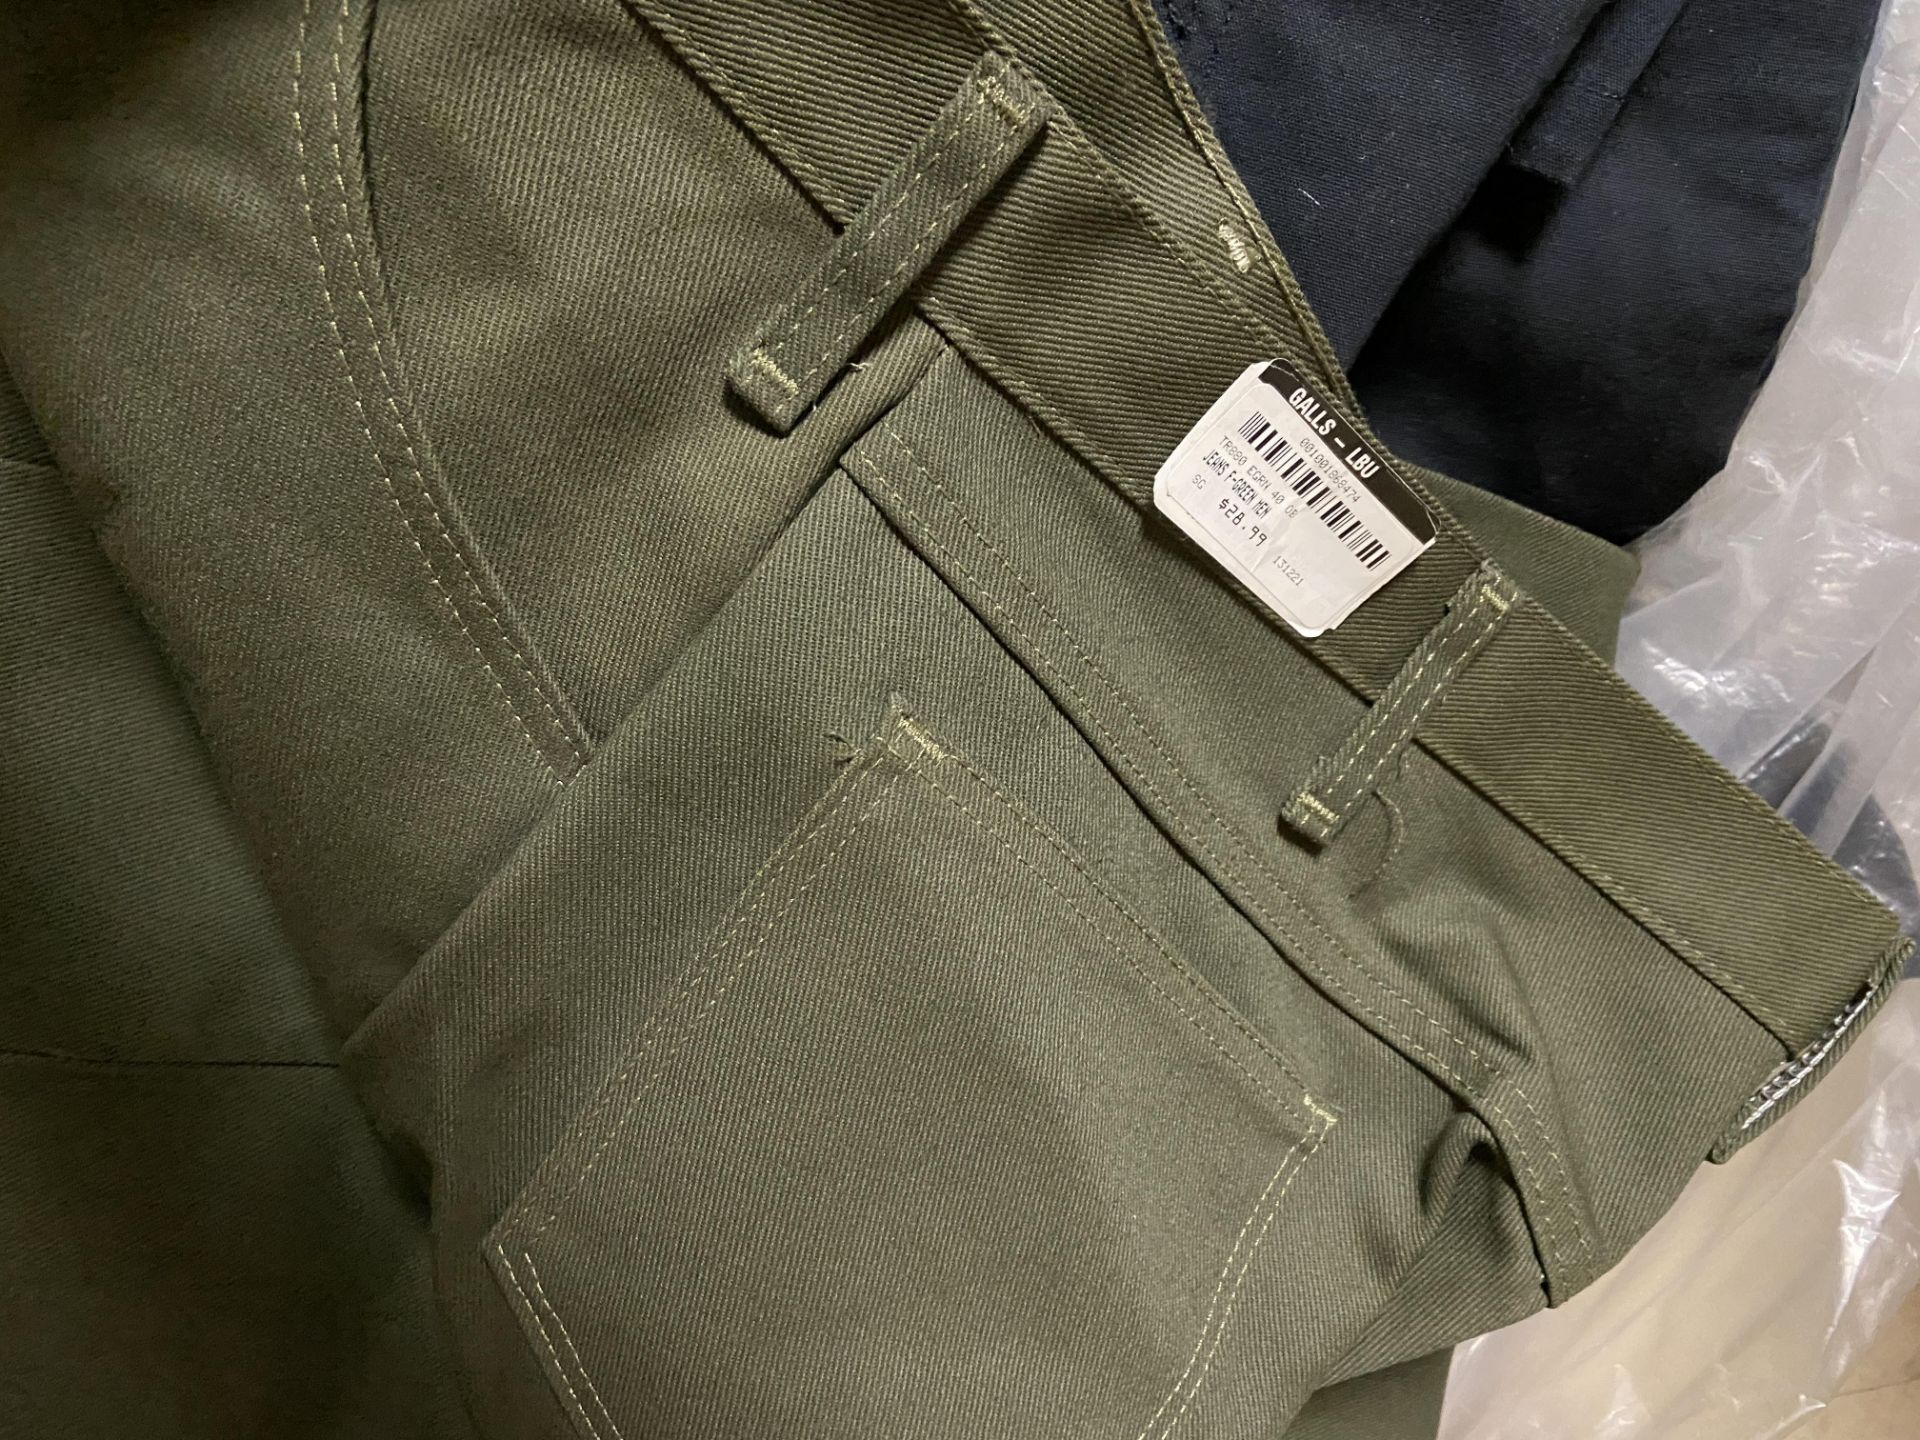 Large bag of Tactical Clothing, Pants, Shirts Etc - Image 4 of 4